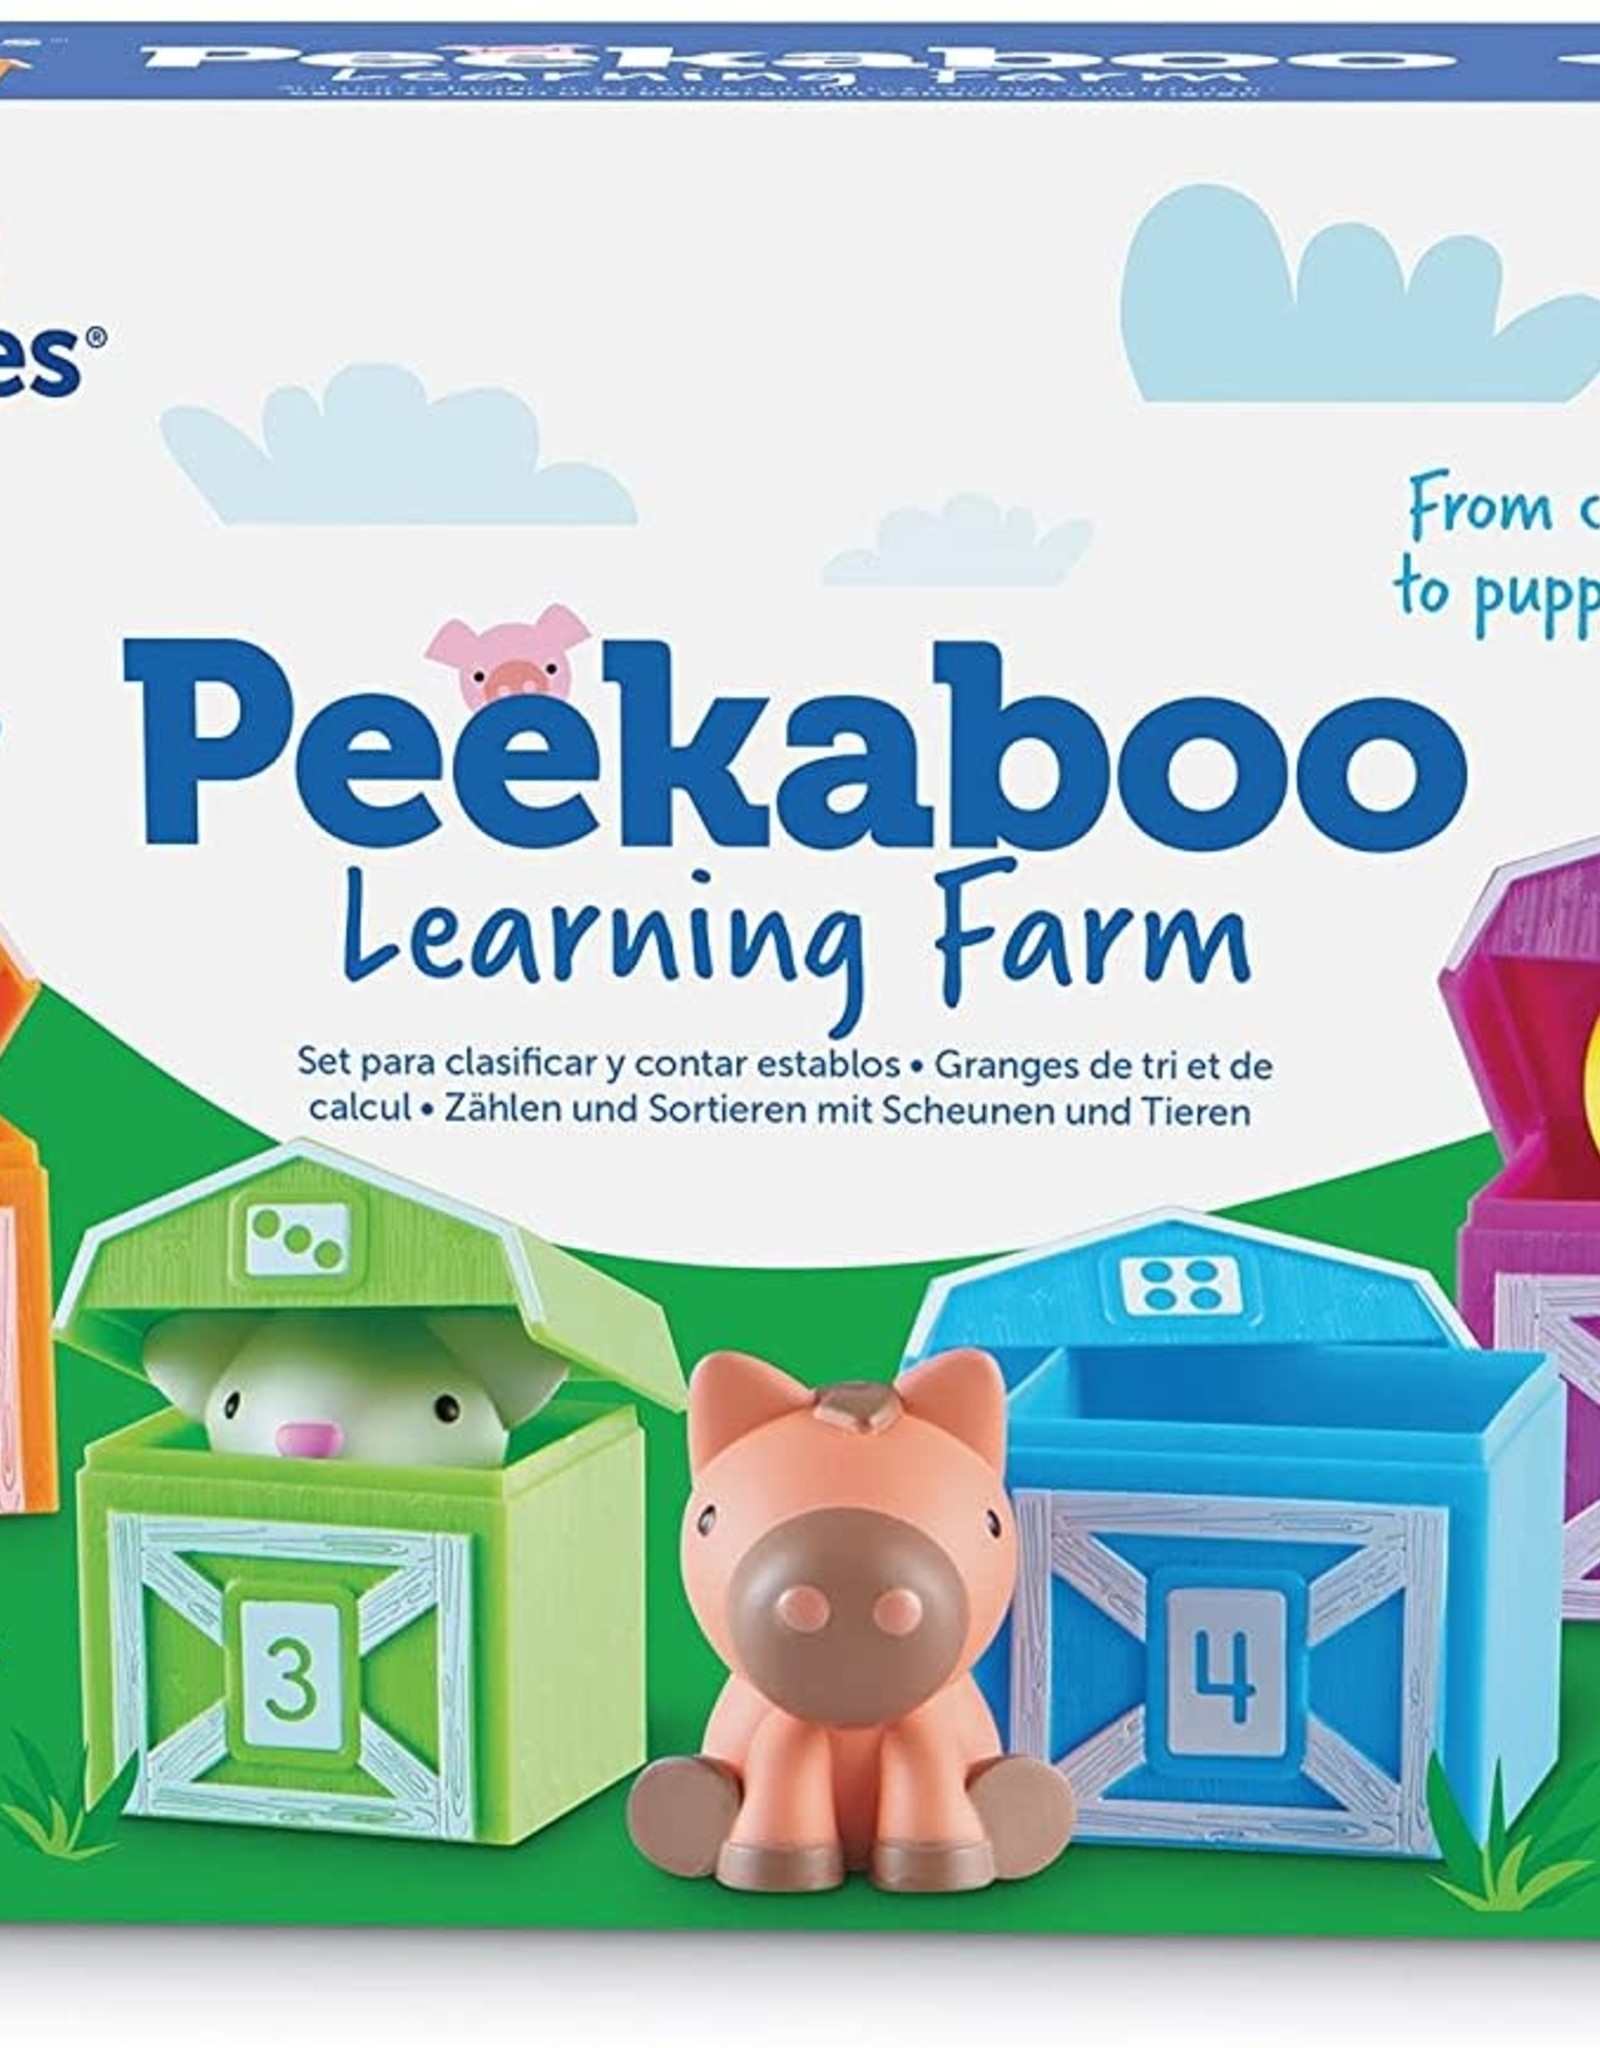 Learning Resources Peekaboo Learning Farm